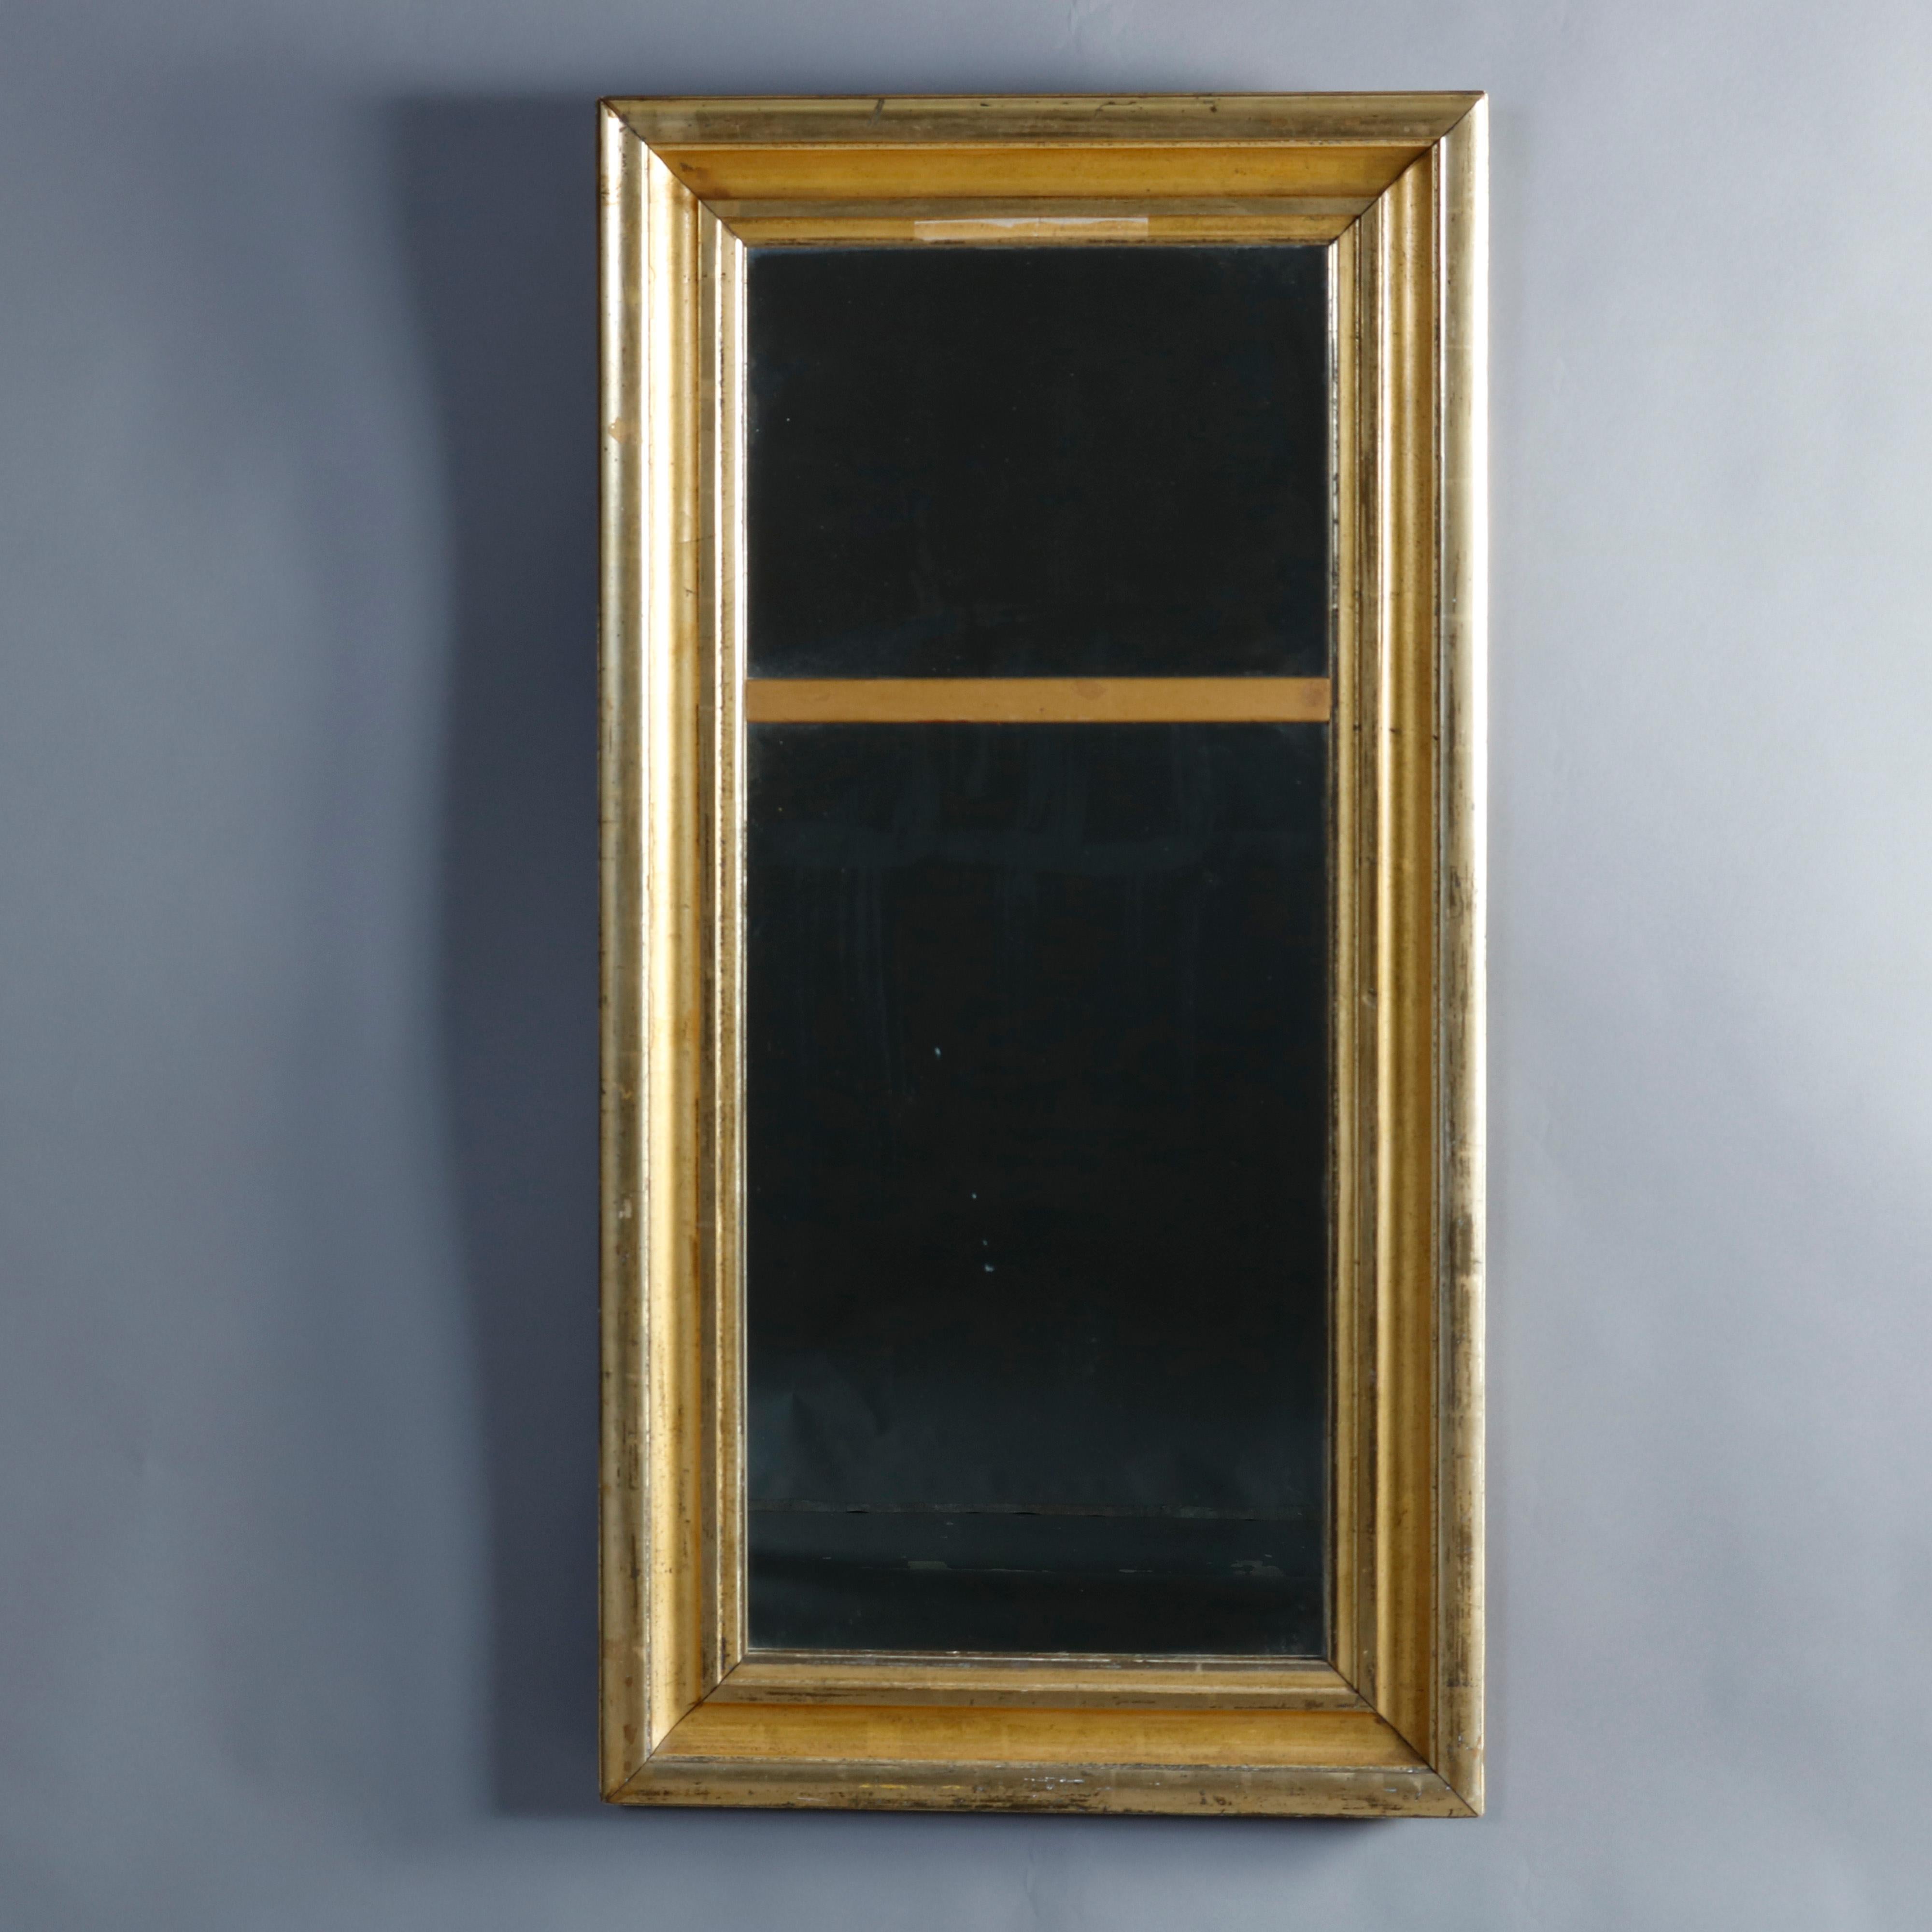 American Antique Lemon Giltwood Trumeau Wall Mirror, Circa 1840